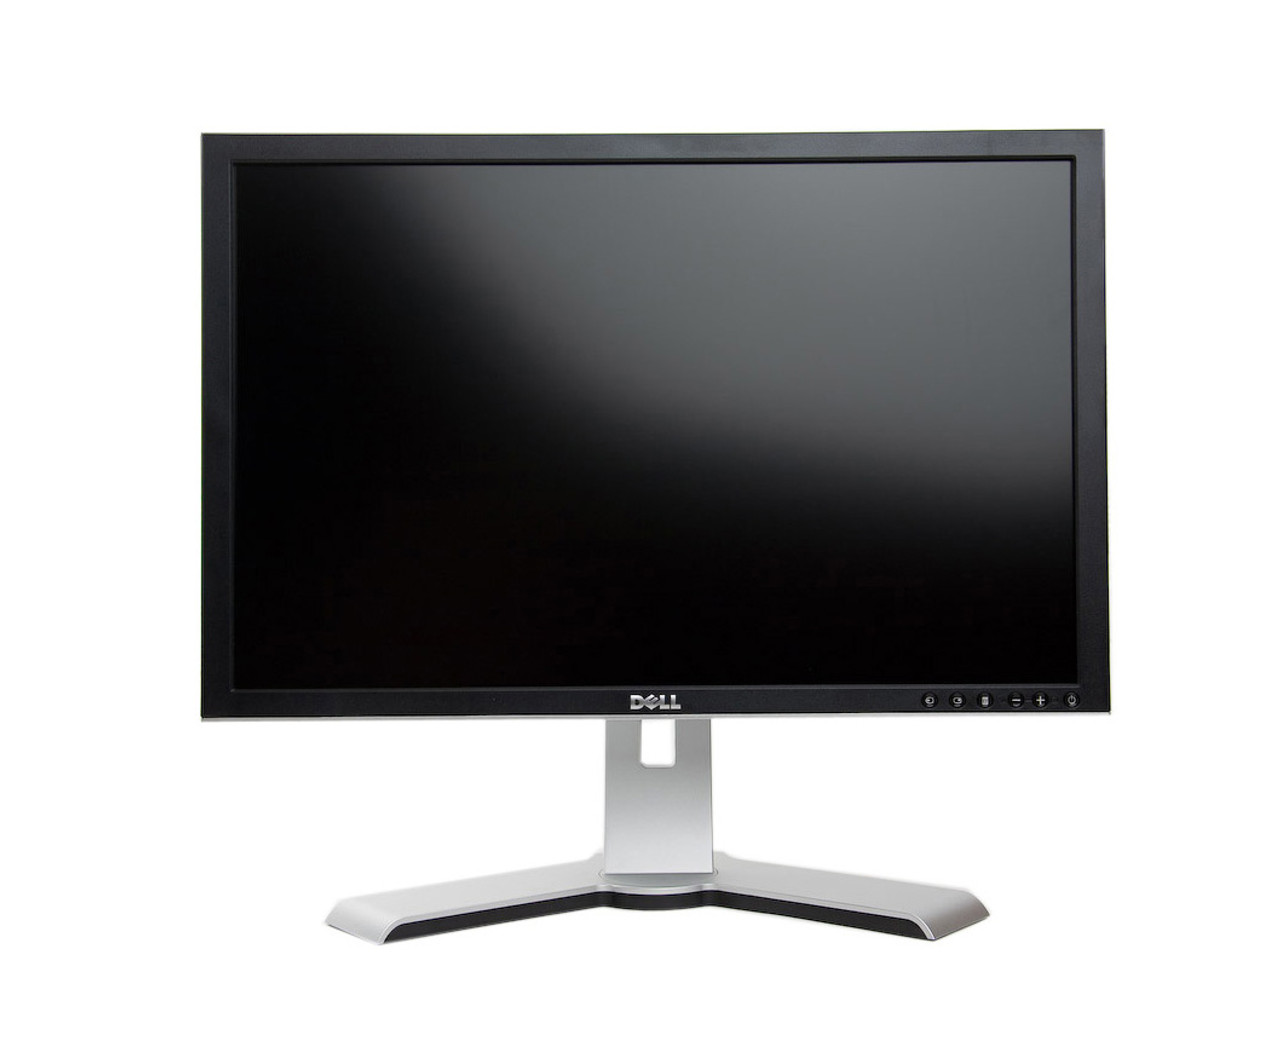 JU436 - Dell 24-inch UltraSharp 2408WFP 1920 x 1200 at 60Hz Widescreen TFT Flat Panel LCD Monitor (Refurbished)